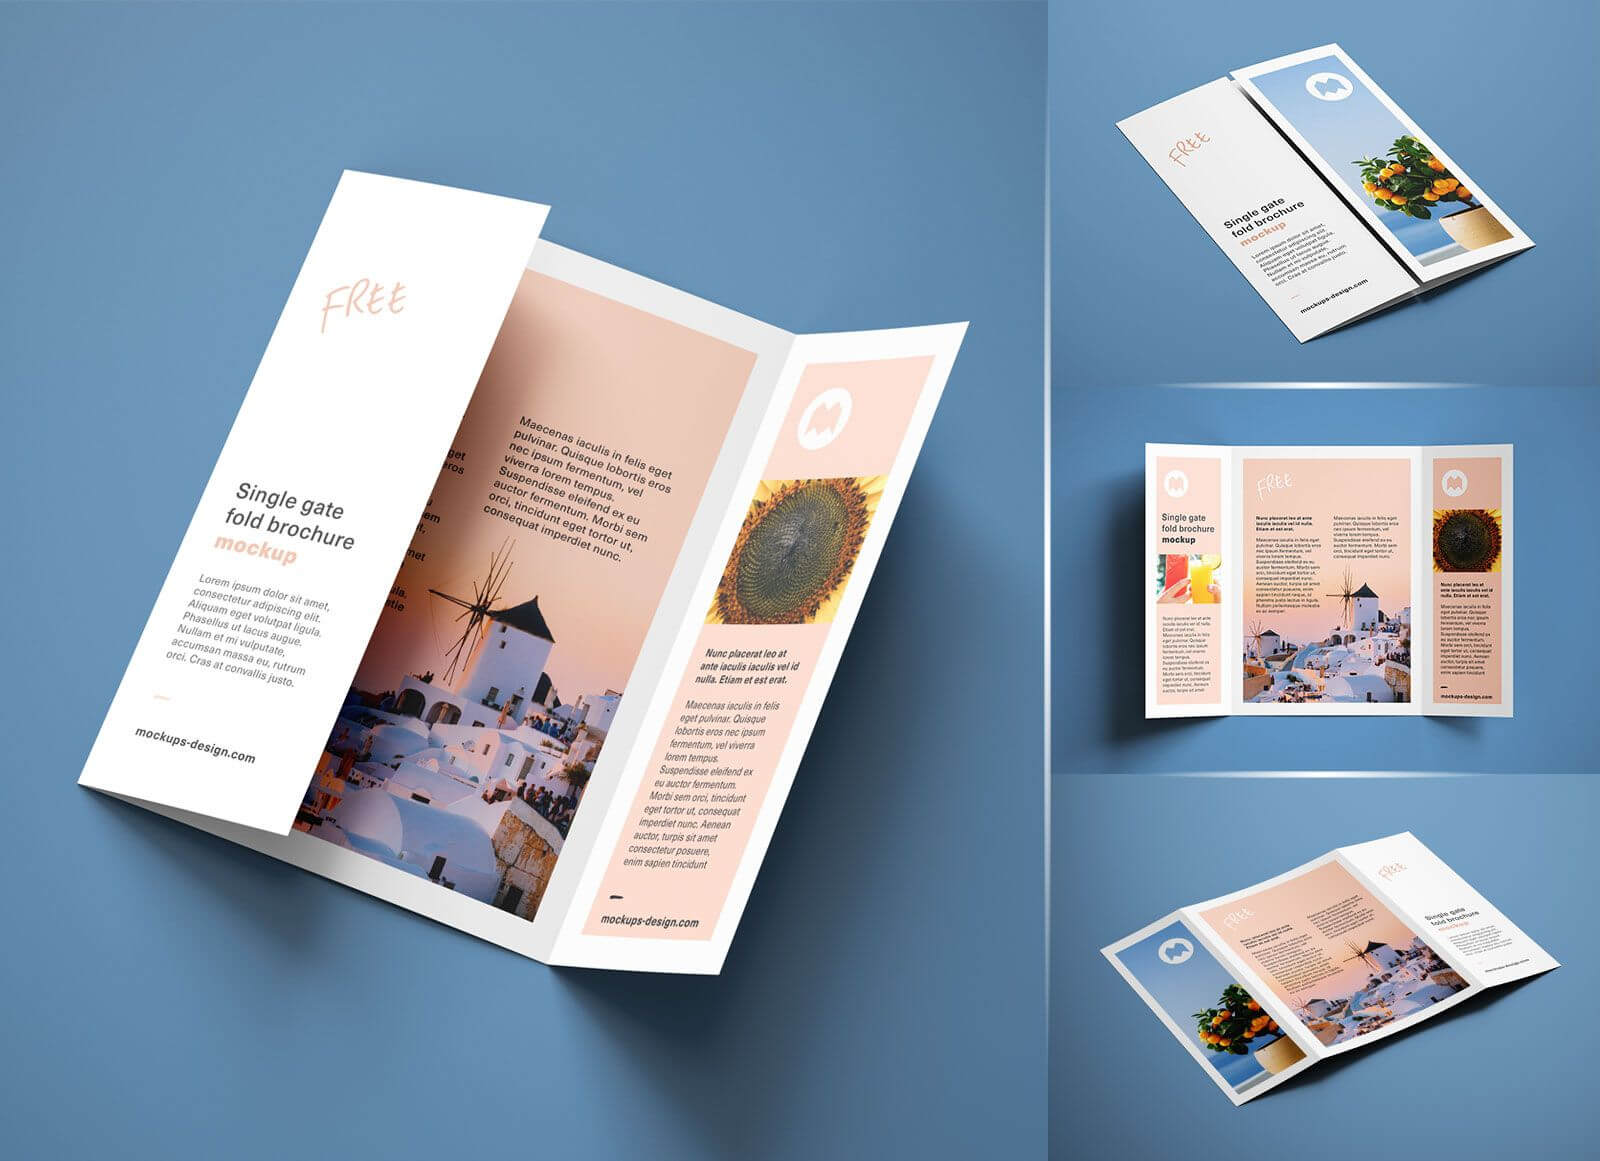 Free A4 Single Gate Fold Brochure Mockup Psd Set | Graphic In Gate Fold Brochure Template Indesign